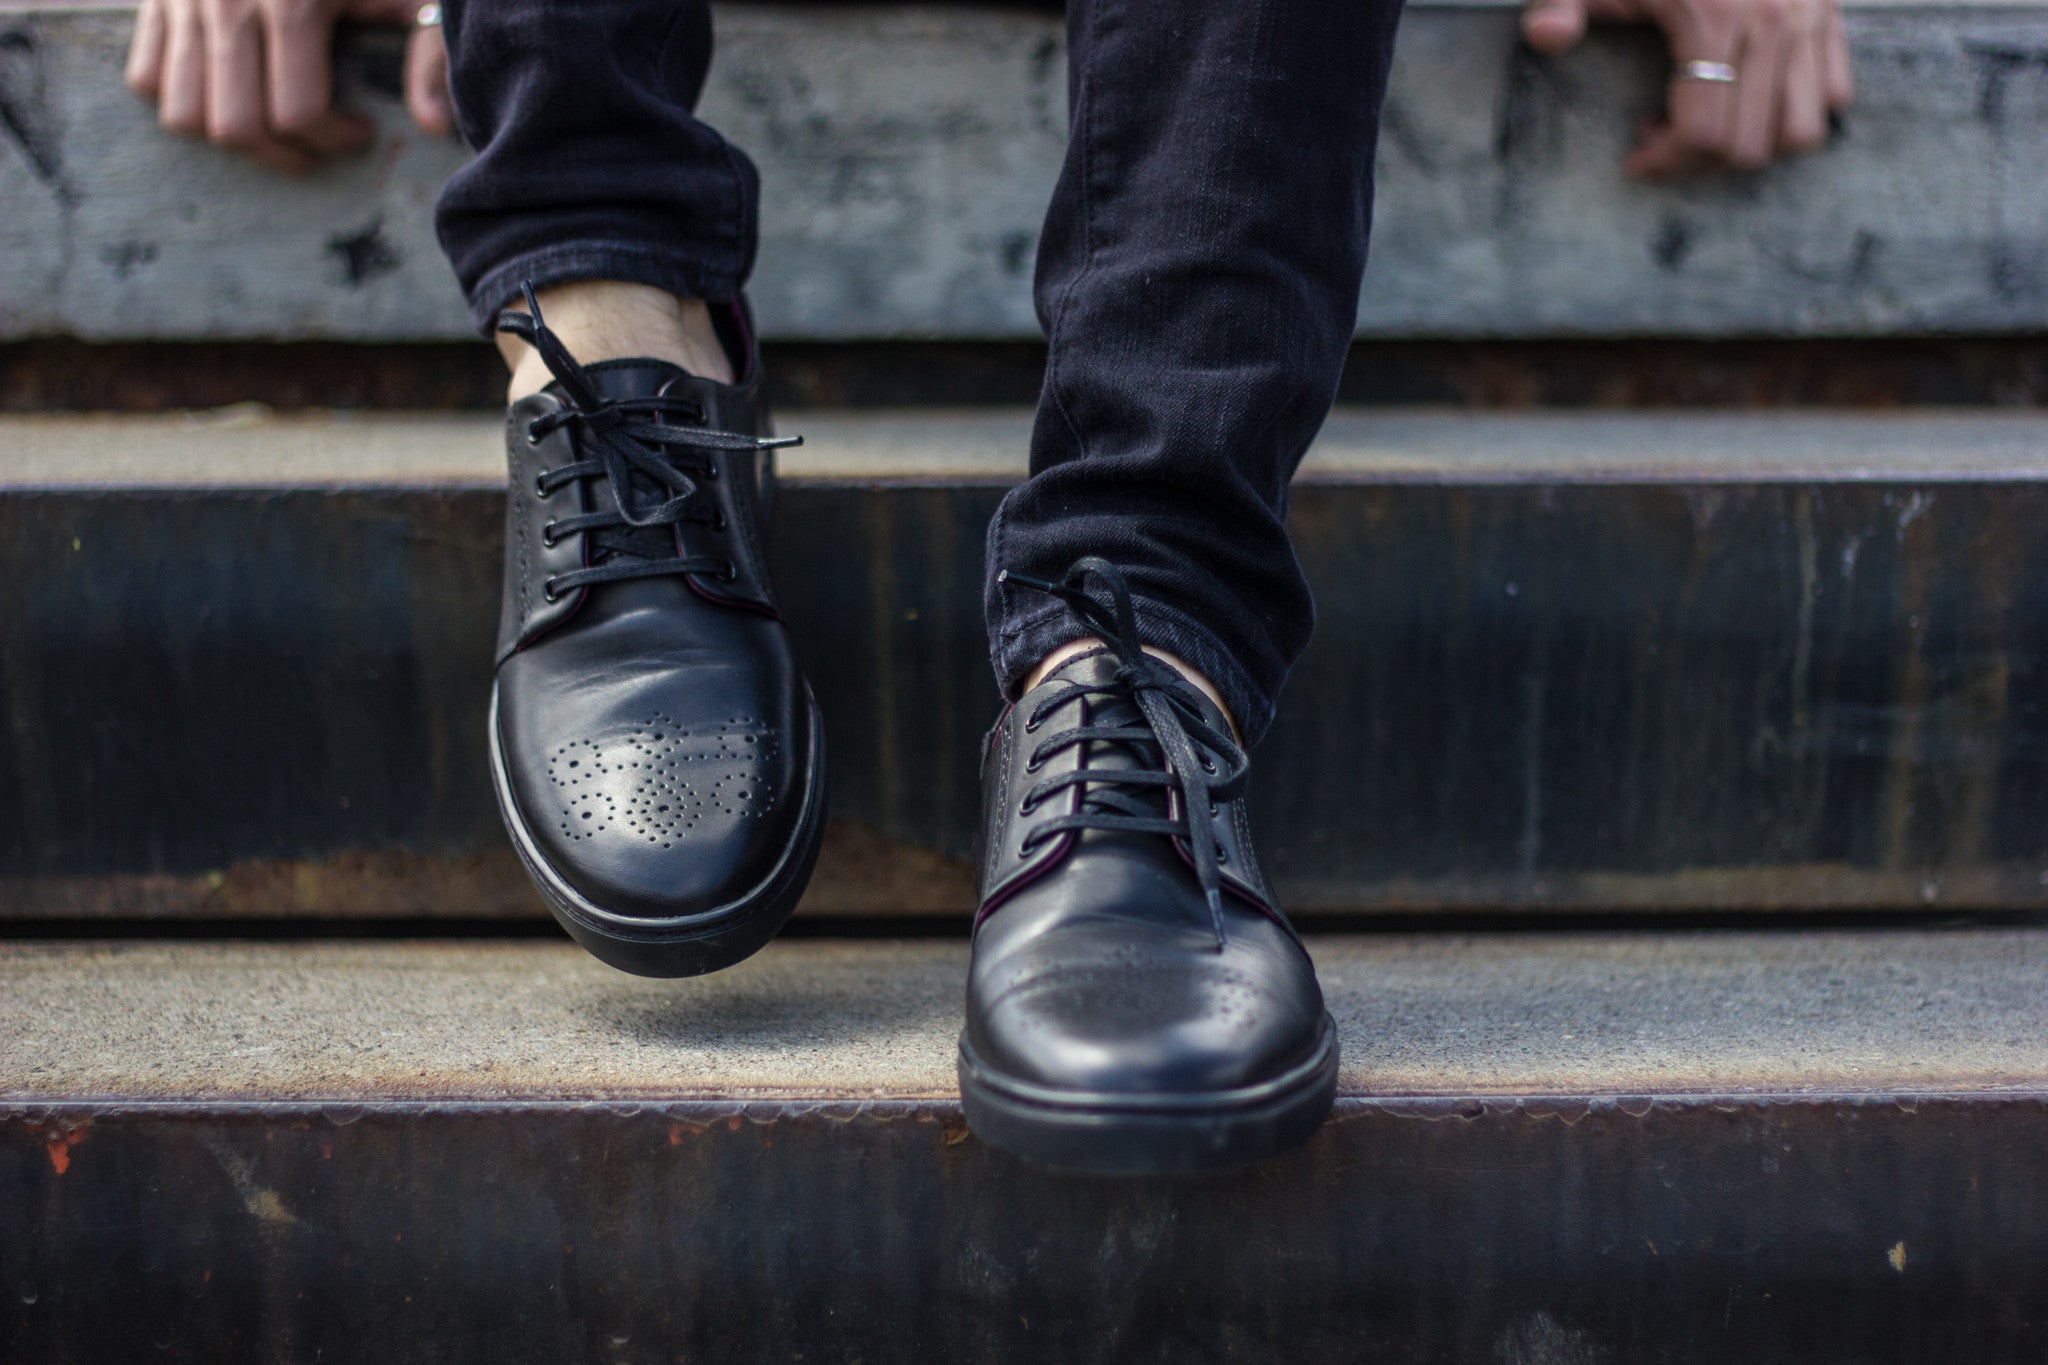 Buy EMPORIO ARMANI Lace-Up Leather Sneakers | Black Color Men | AJIO LUXE